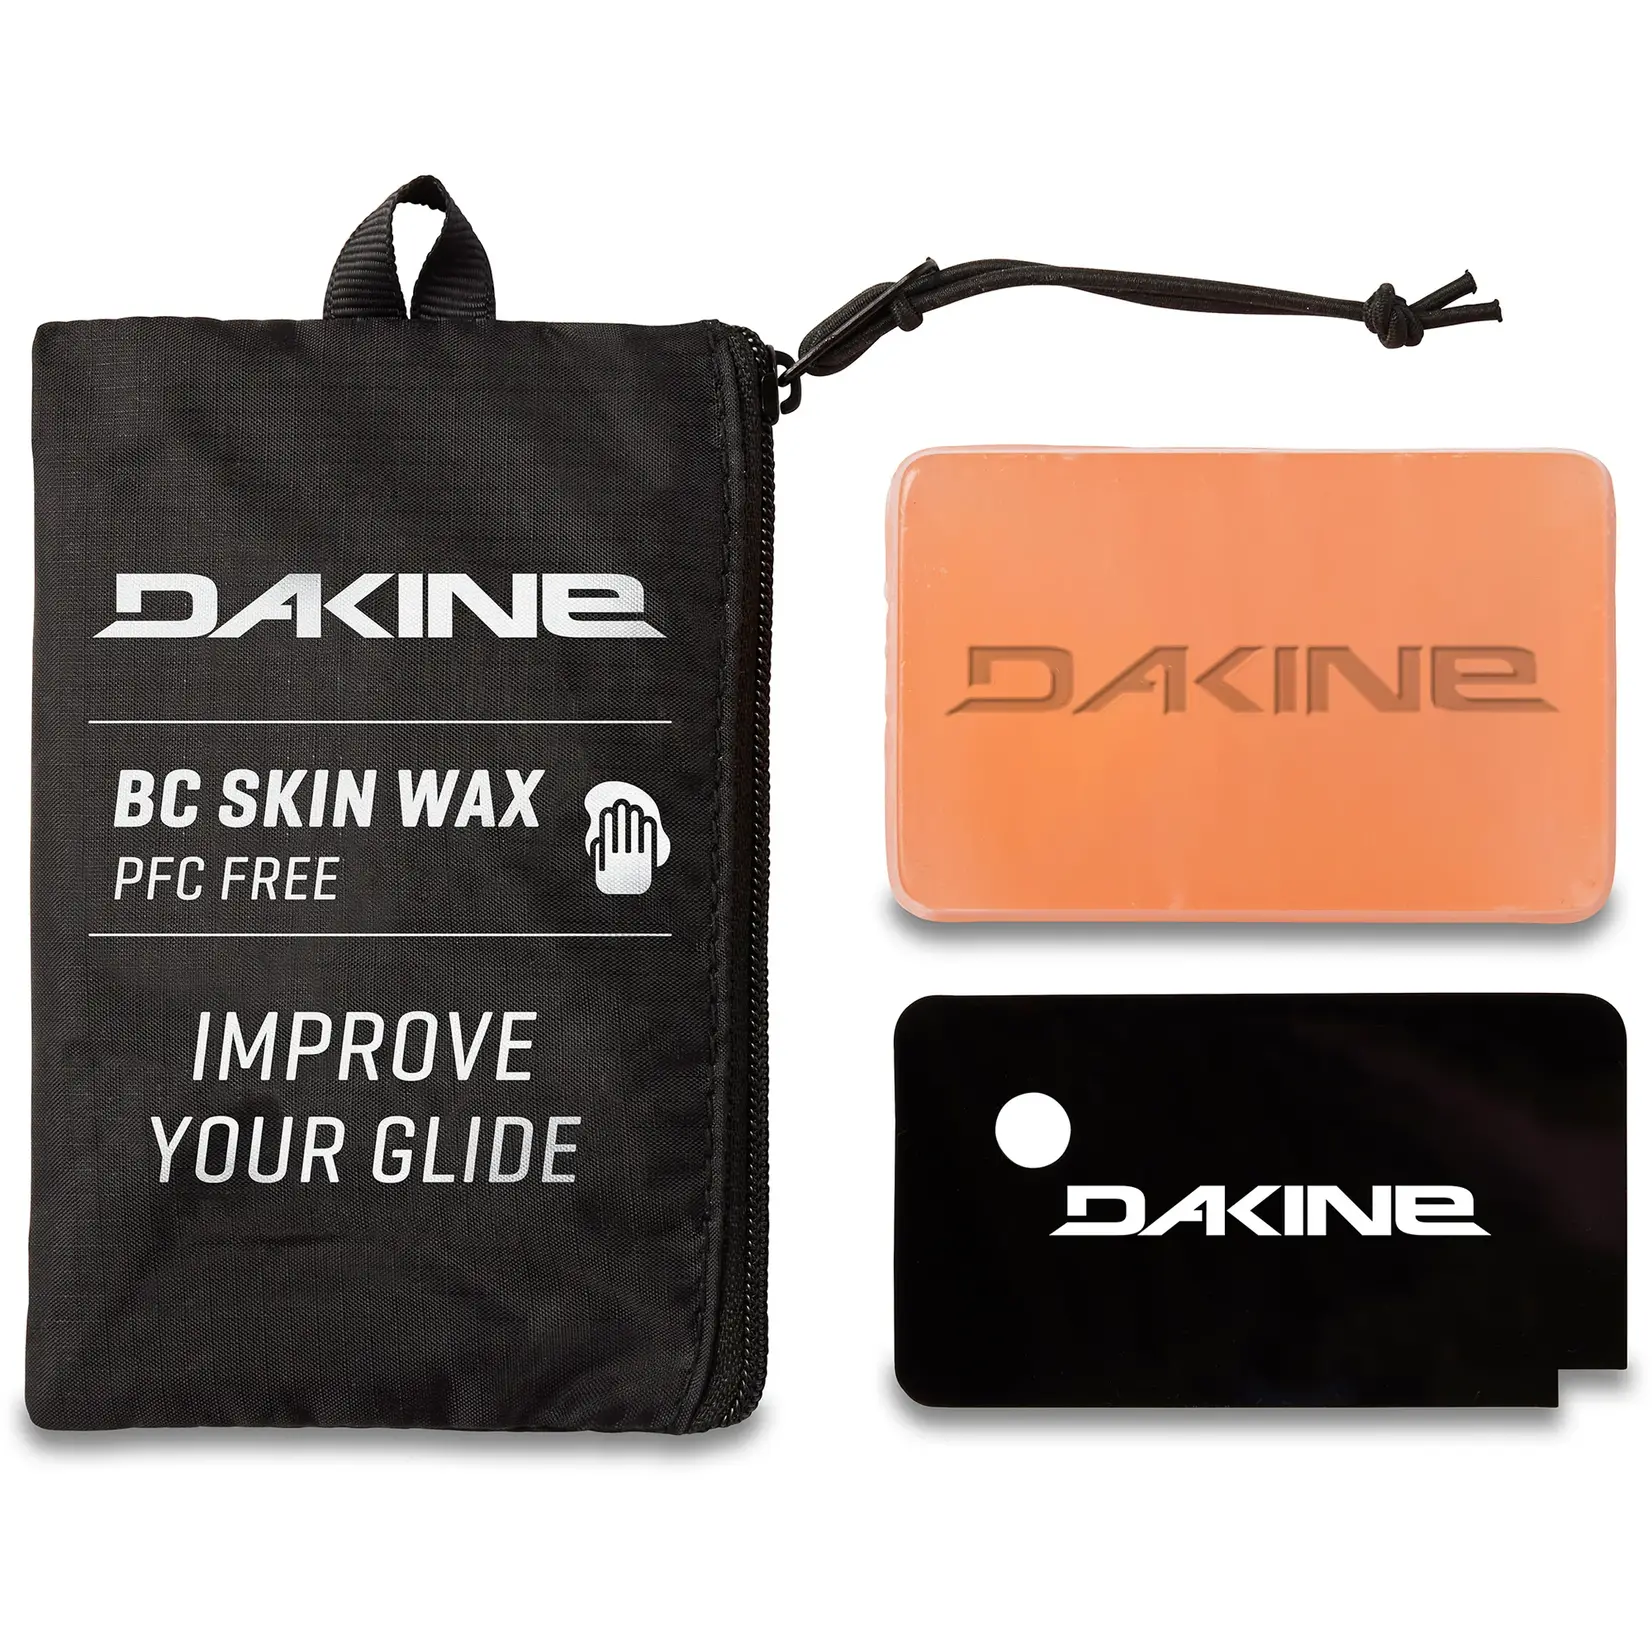 Dakine Dakine Backcountry Skin Wax - 50 gram bar in carrying case